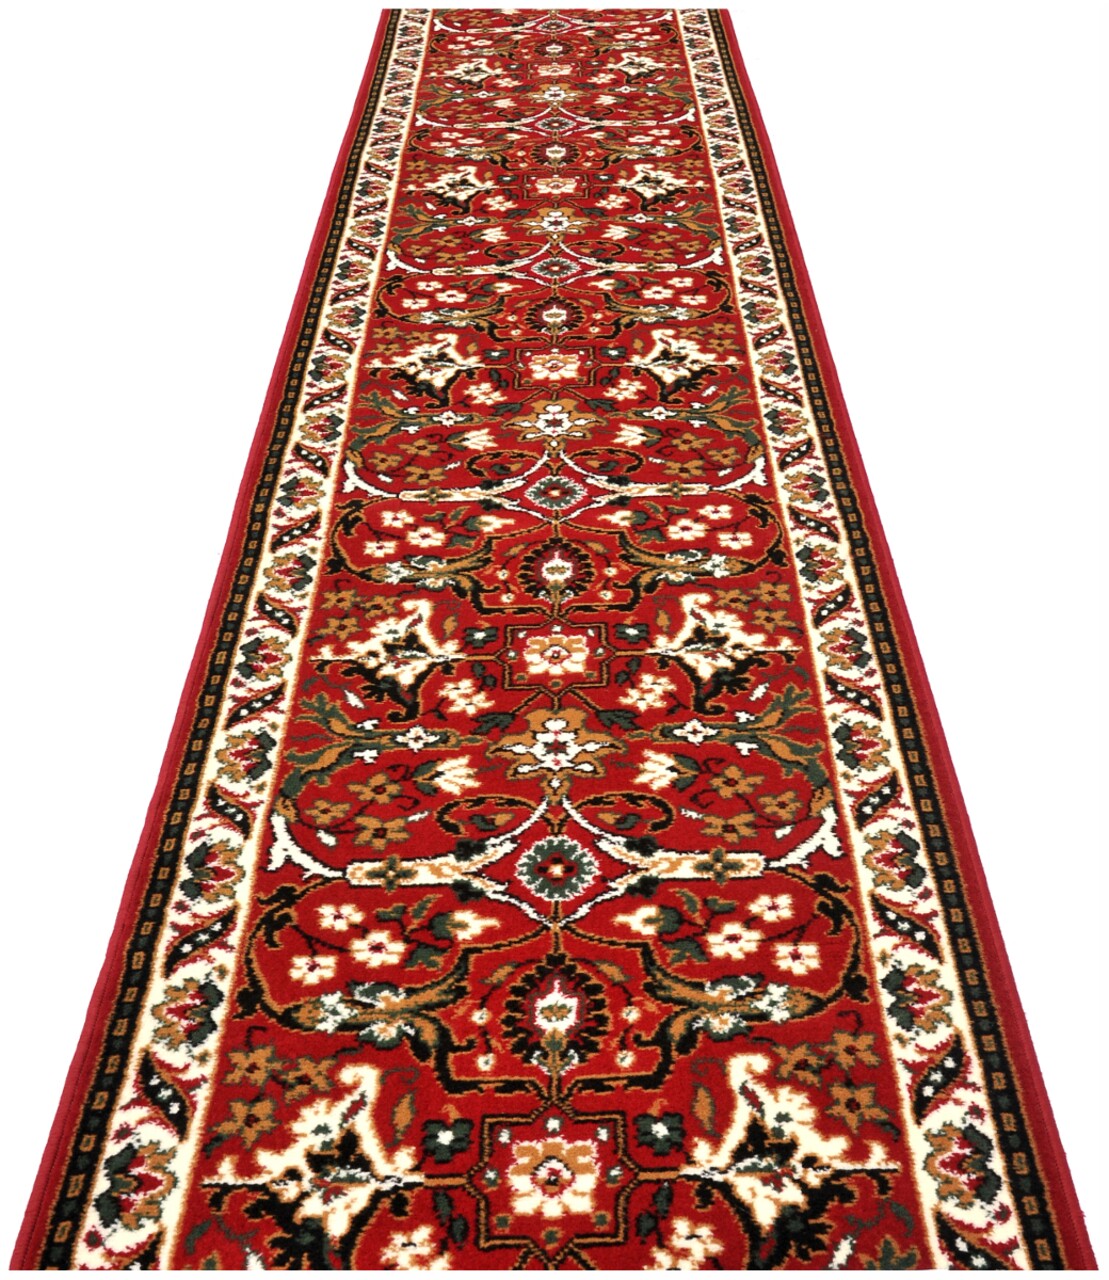 Baghdati folyosó szőnyeg, Decorino, 80x100 cm, polipropilén, piros